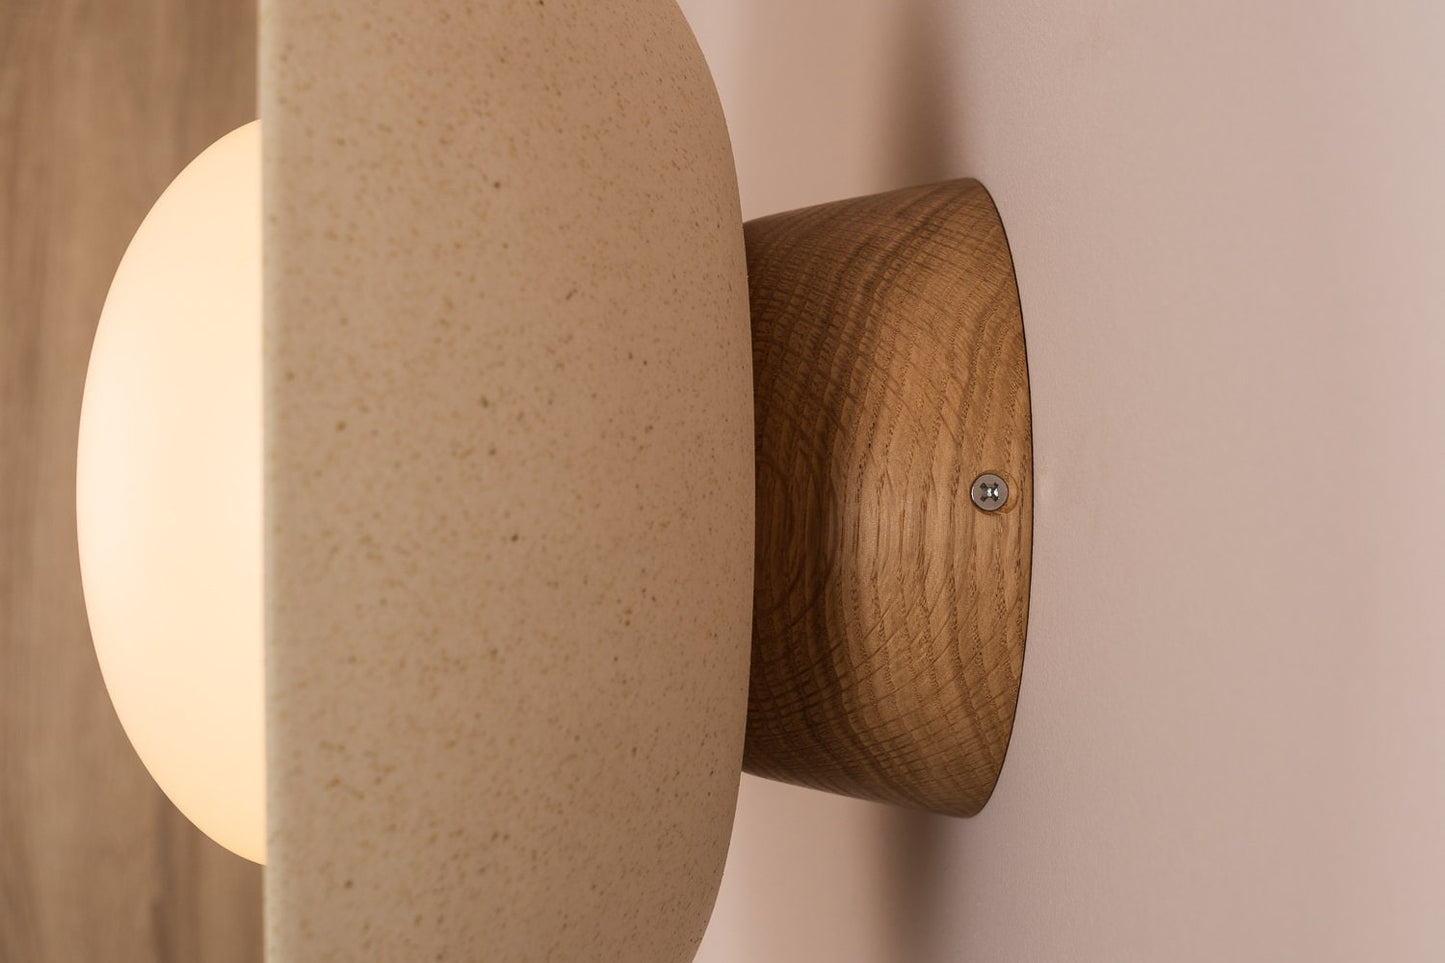 Speckled Cream Matt Dawn Wall Light Sconce in Ceramic and Oak by StudioHaran